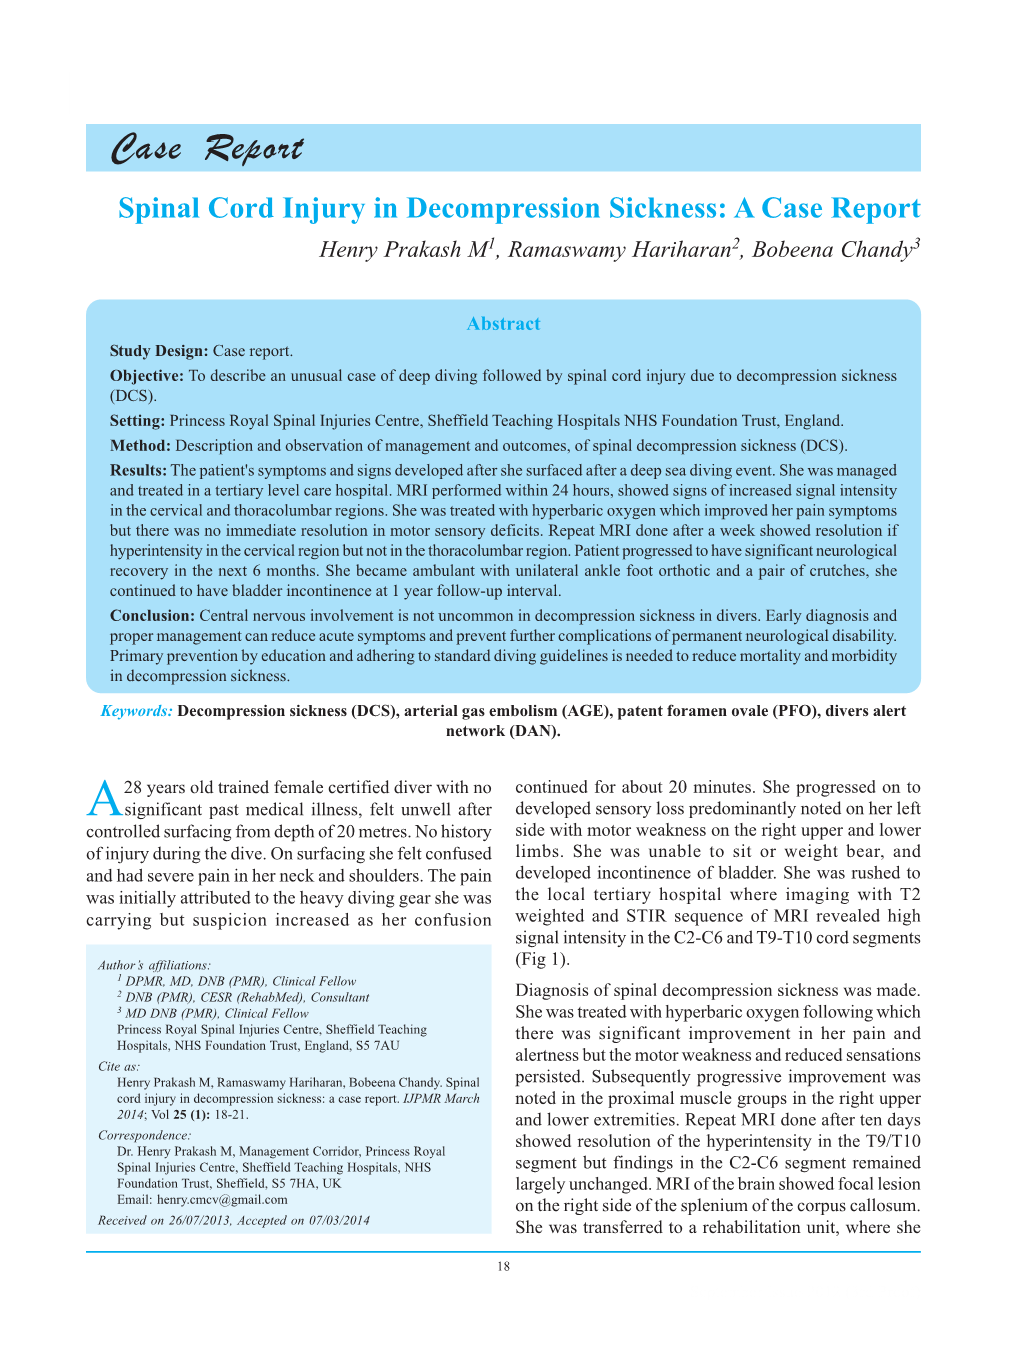 Spinal Cord Injury in Decompression Sickness: a Case Report Henry Prakash M1, Ramaswamy Hariharan2, Bobeena Chandy3